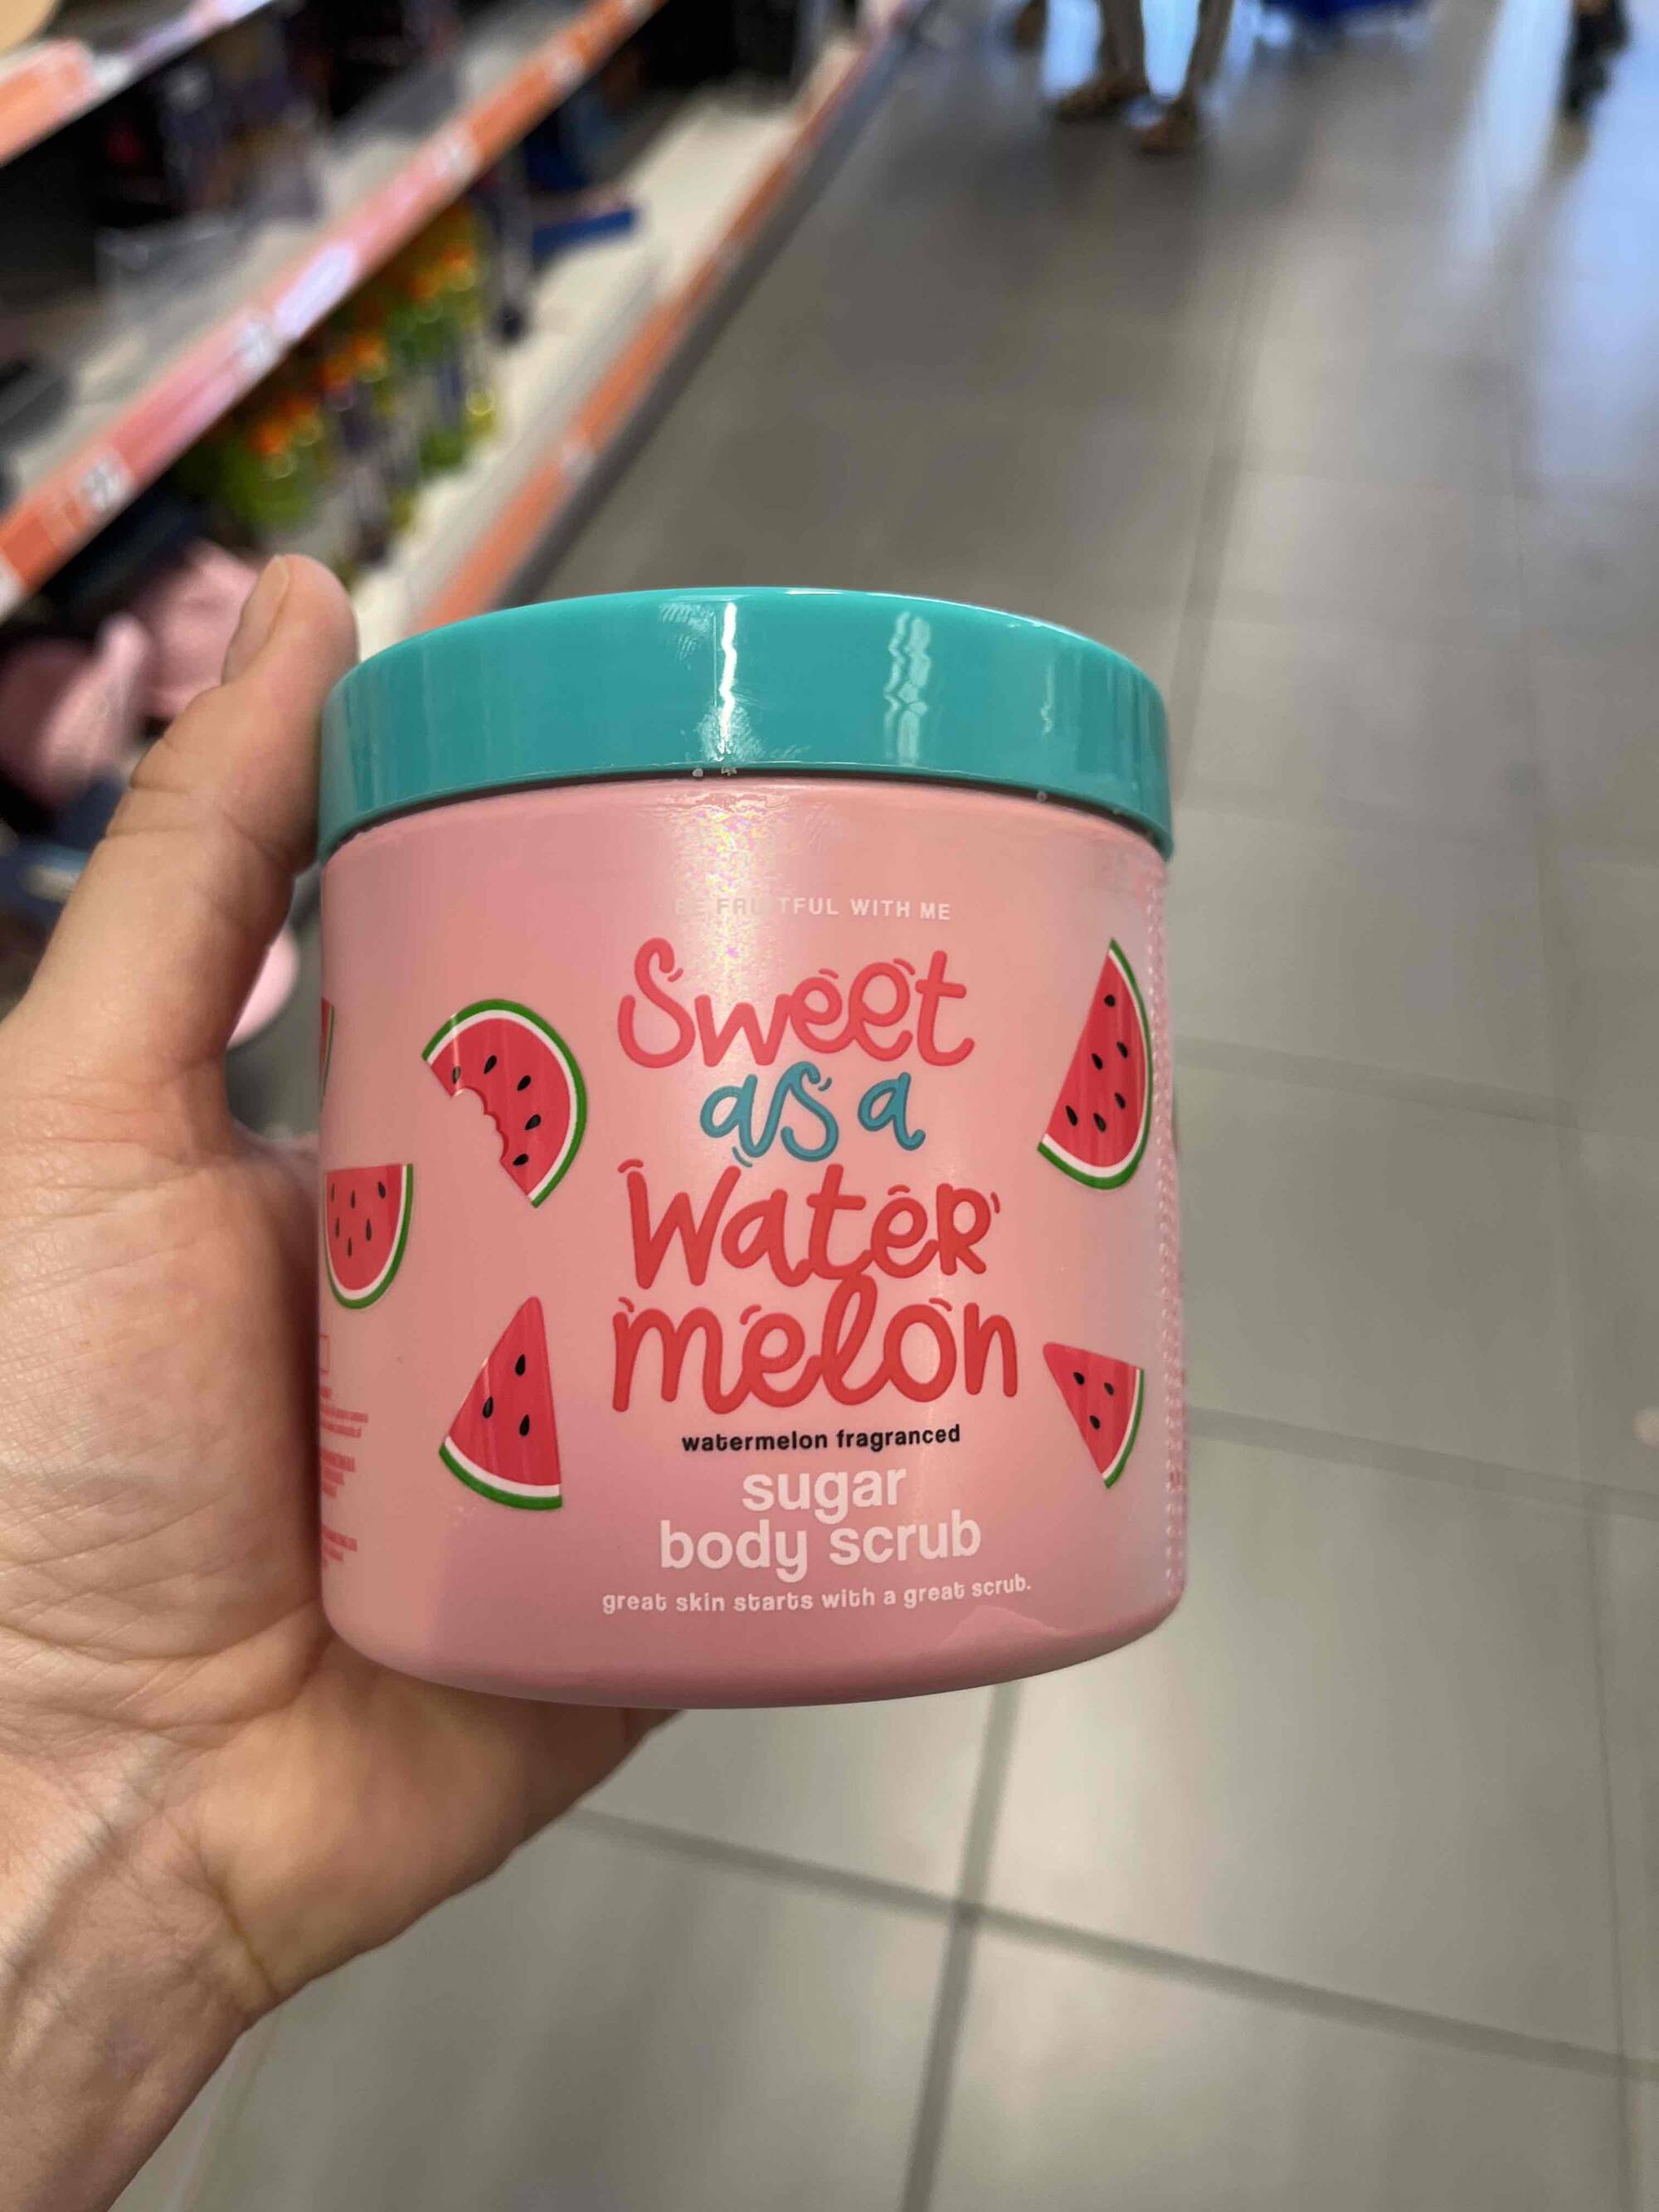 ACTION - Sweet as a water melon - Sugar body scrub